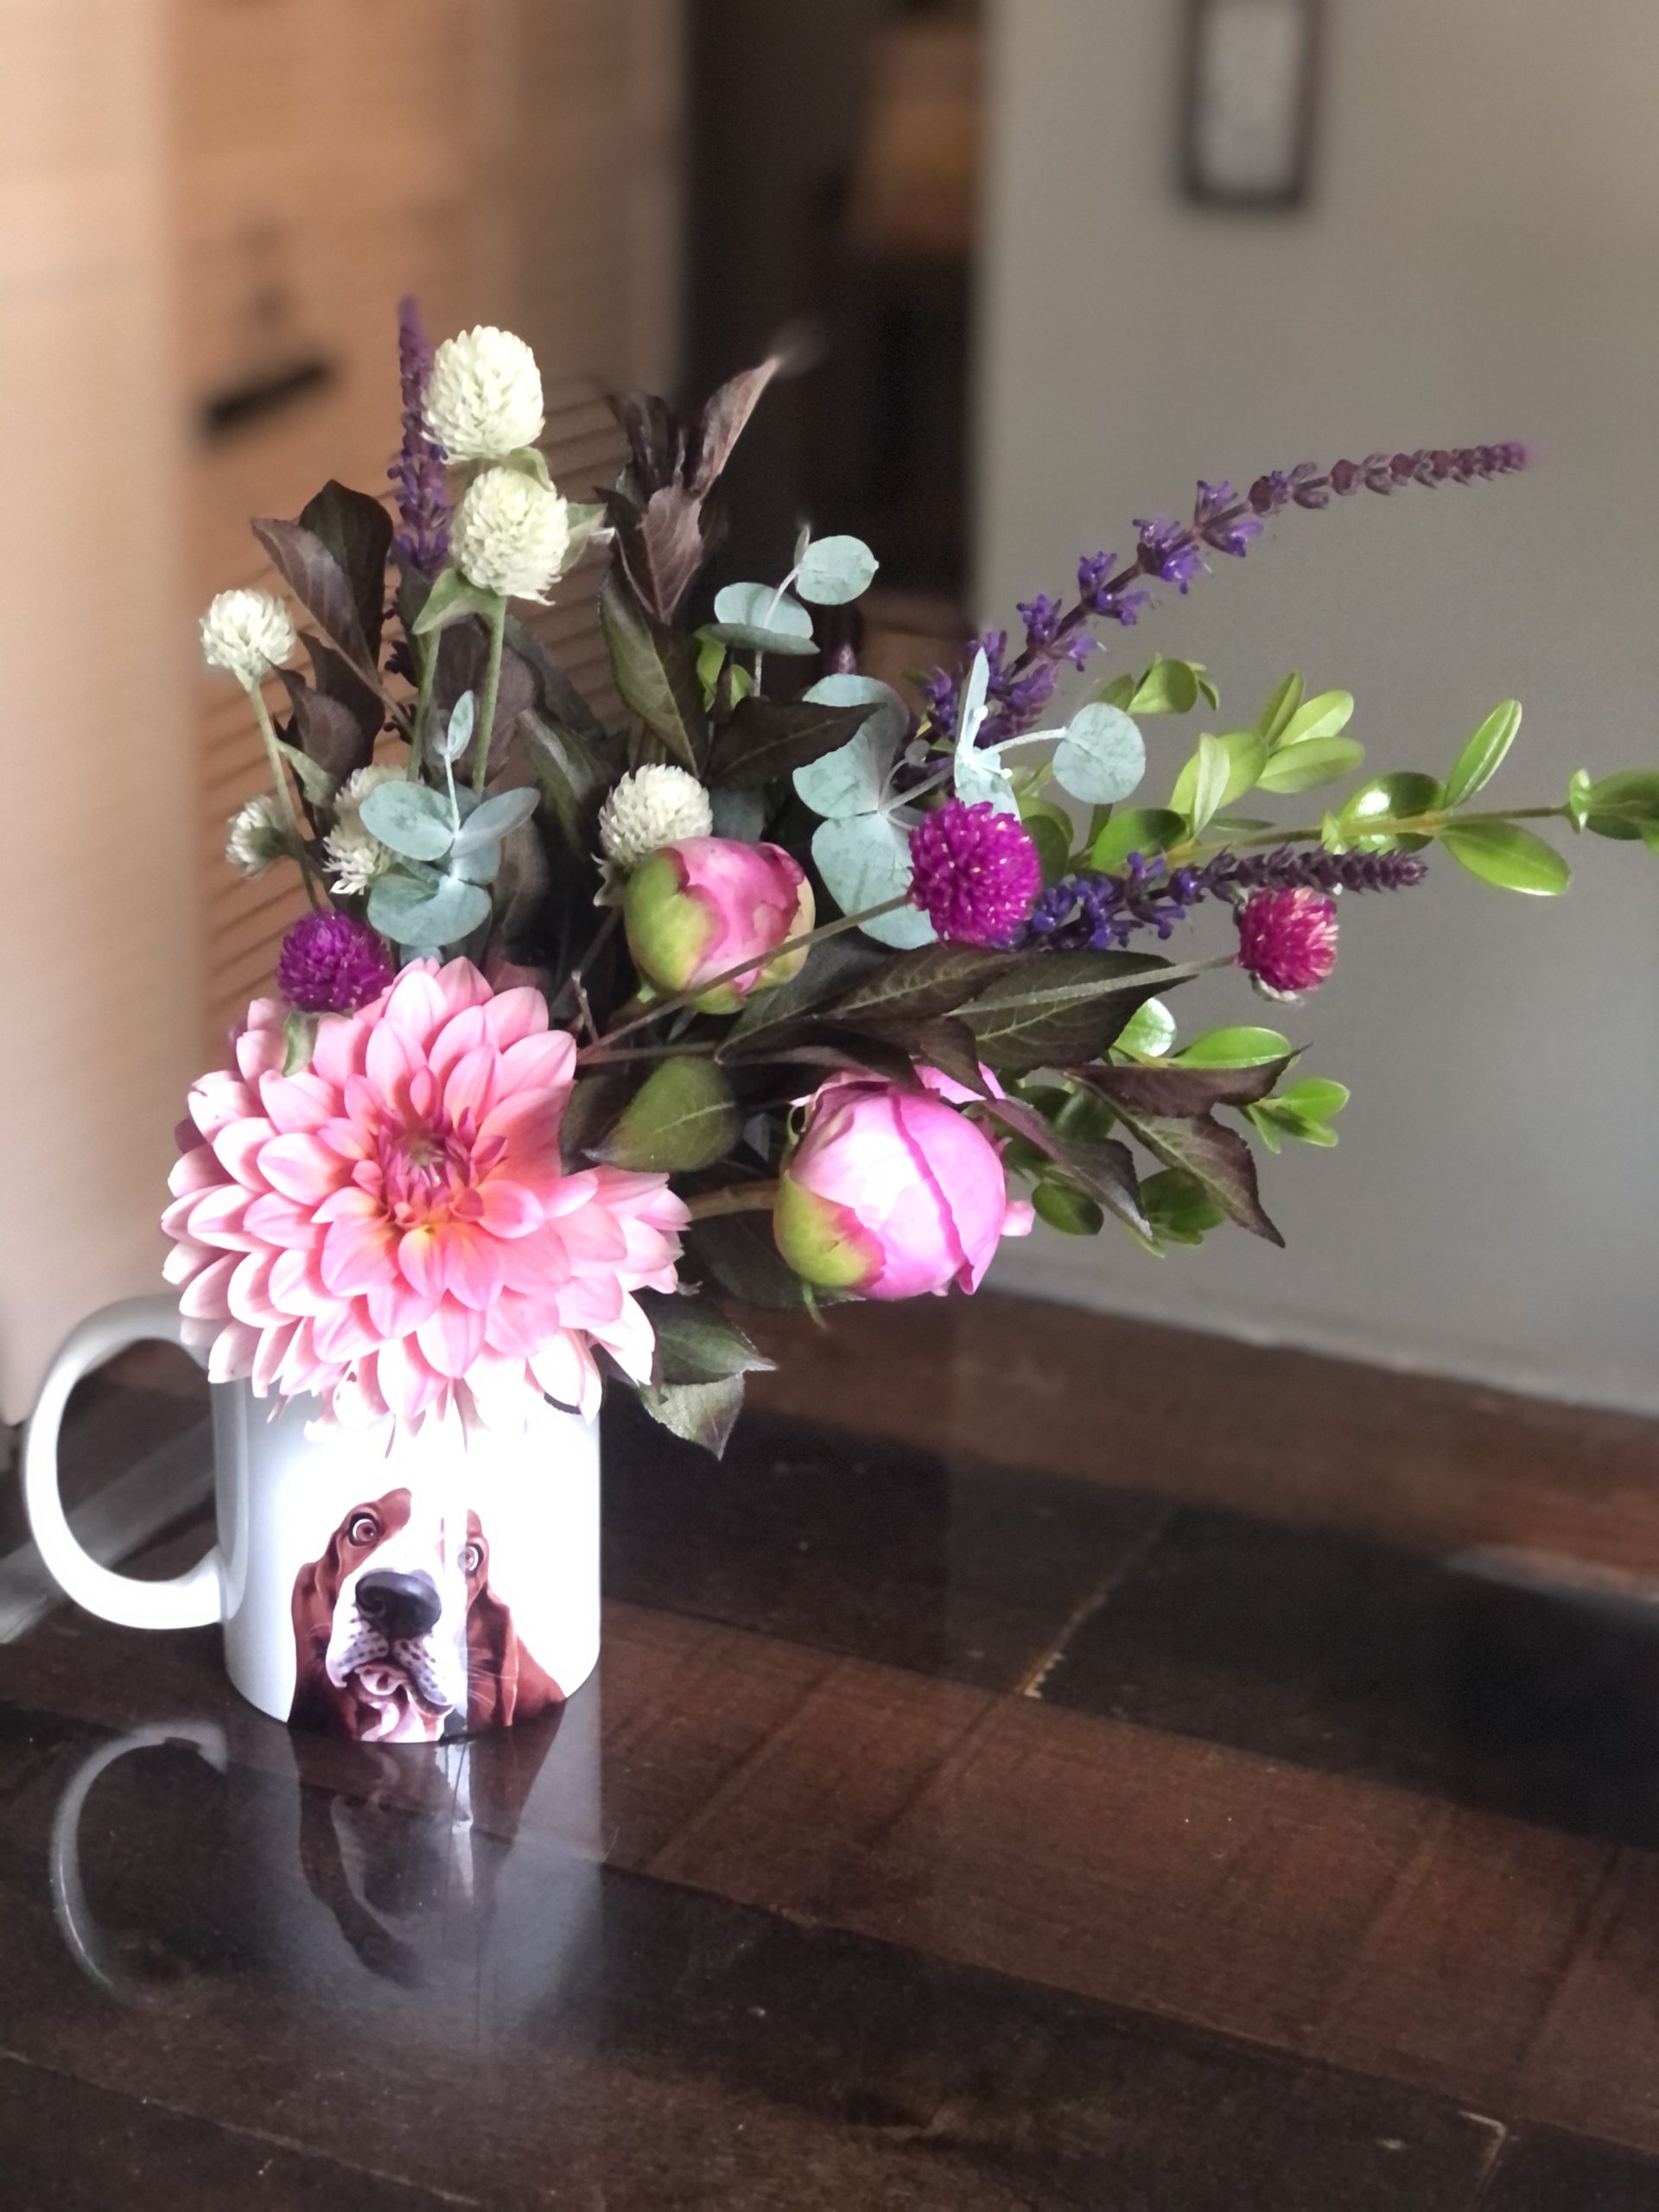 mug bouquet